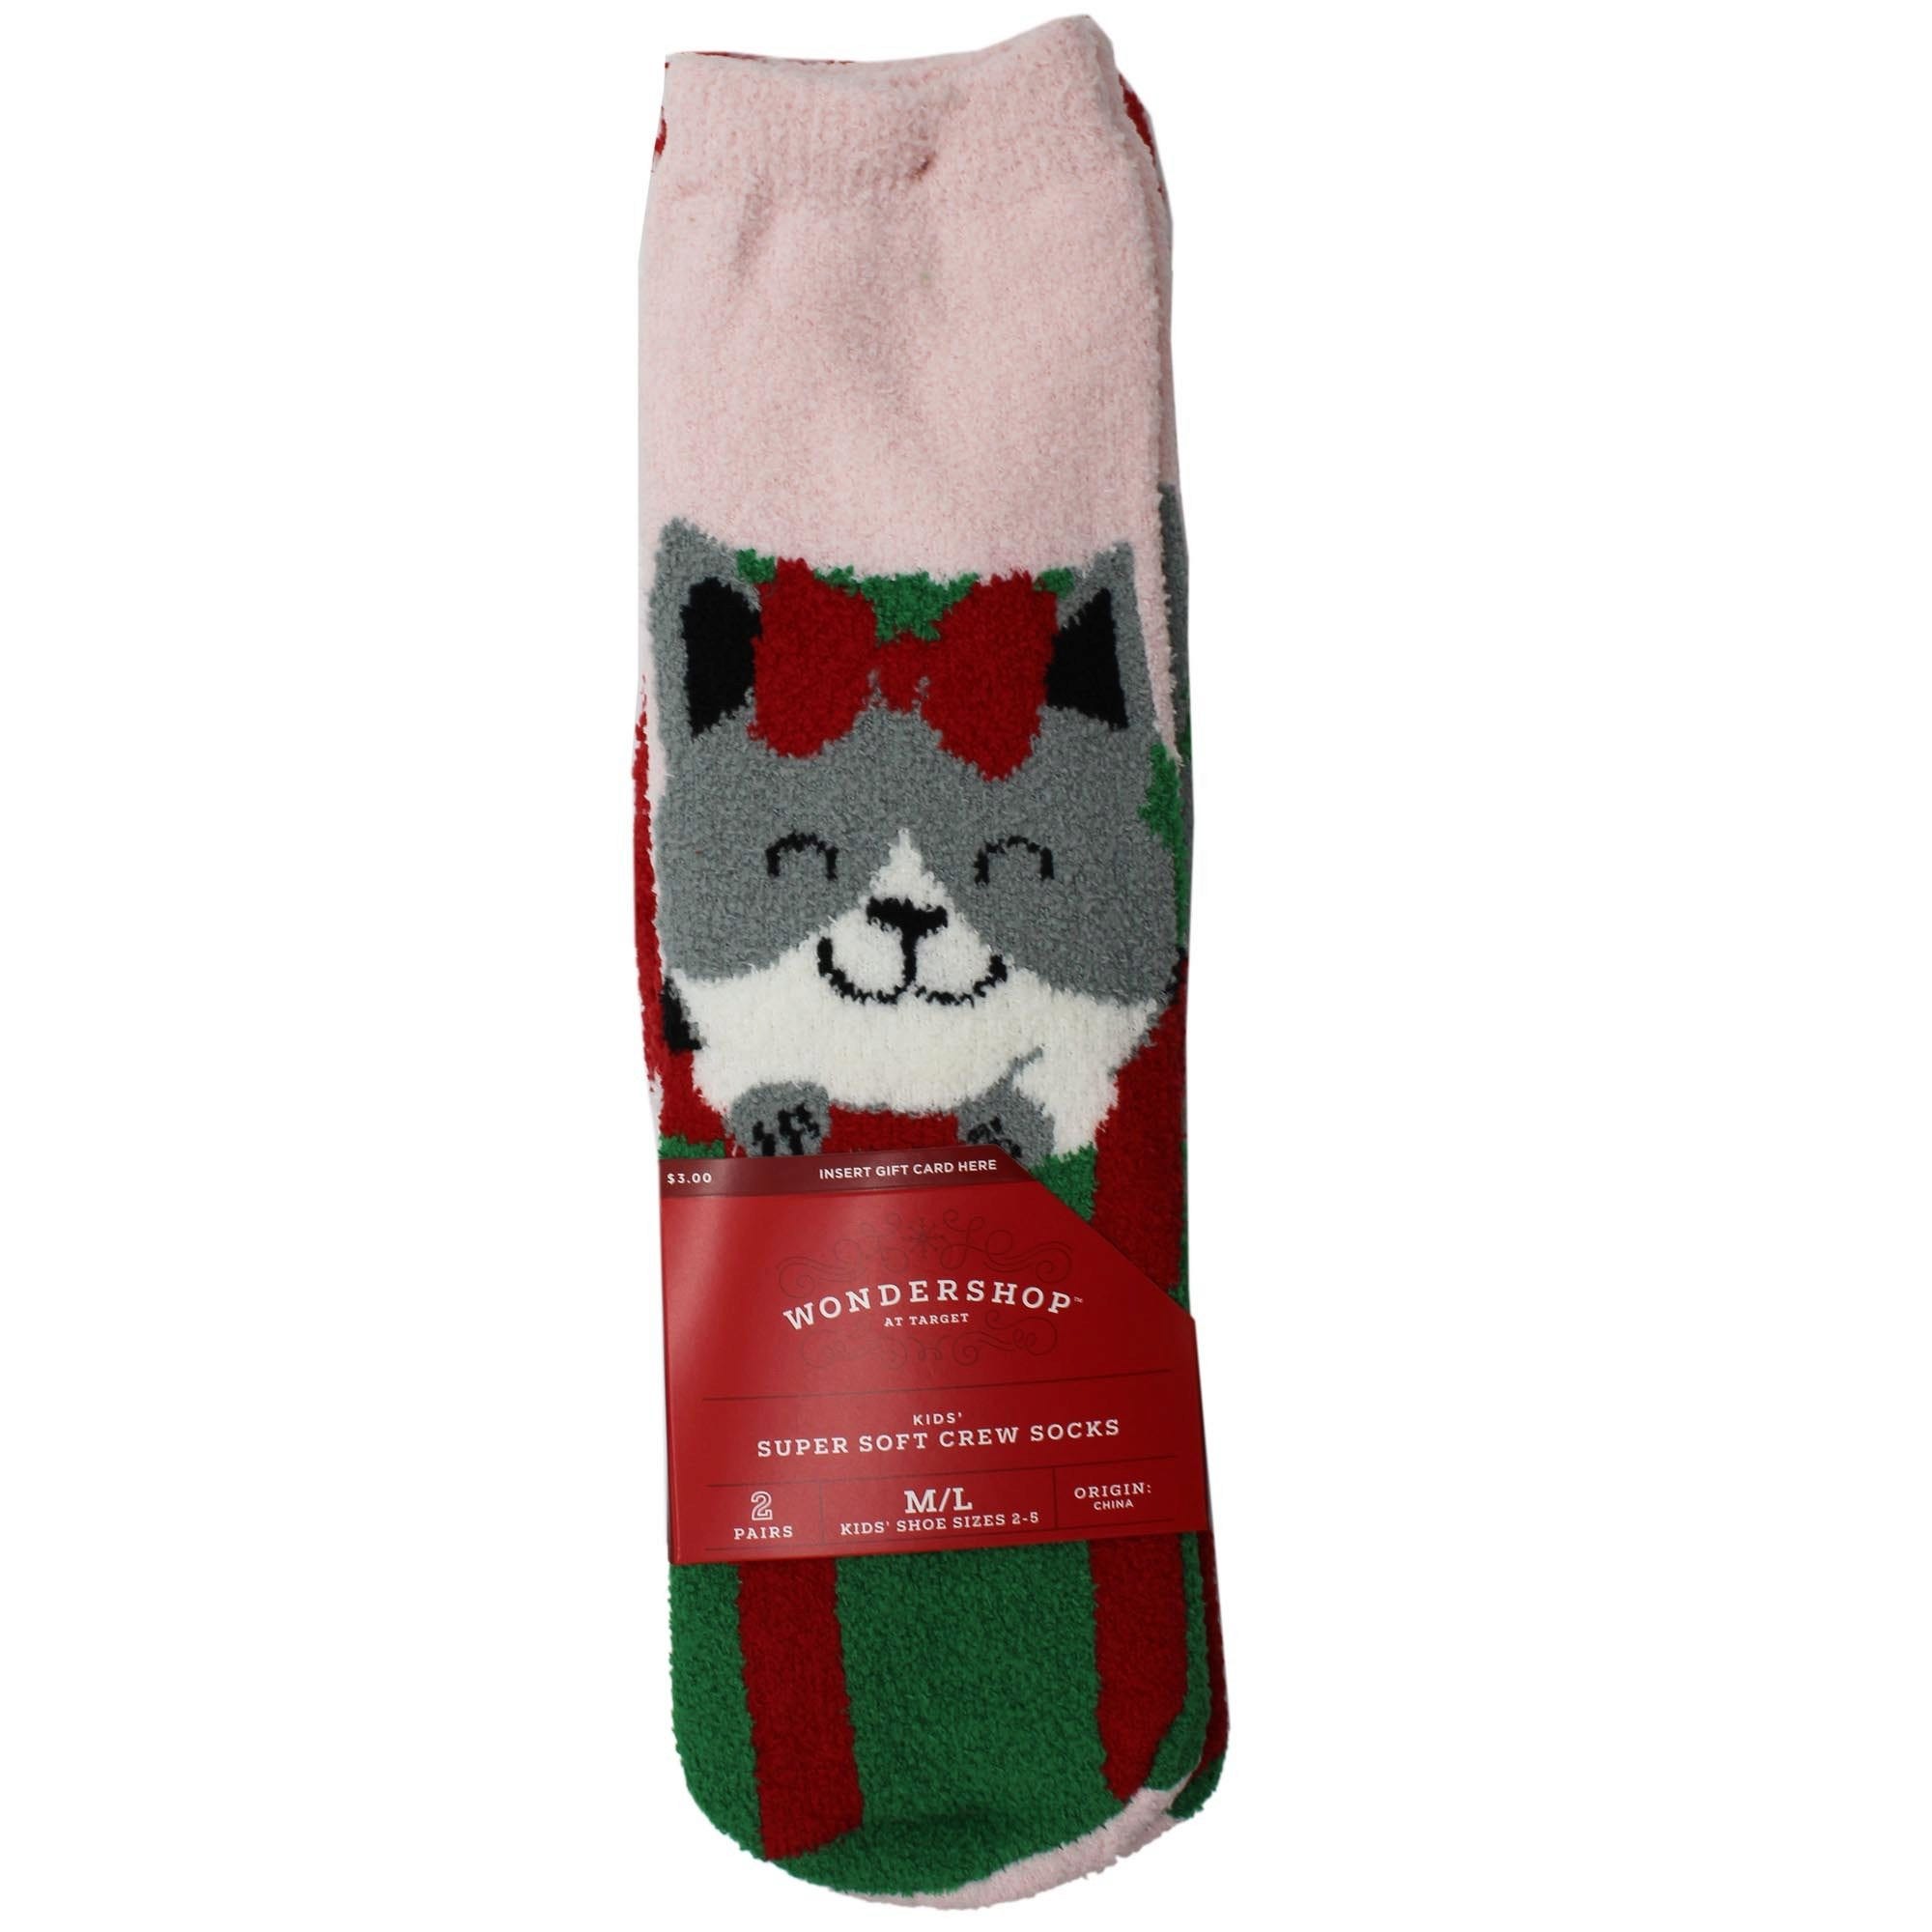 Wondershop 2 Pack Fuzy HOLIDAY Socks Cozy Cat Size M/L - Qty 20